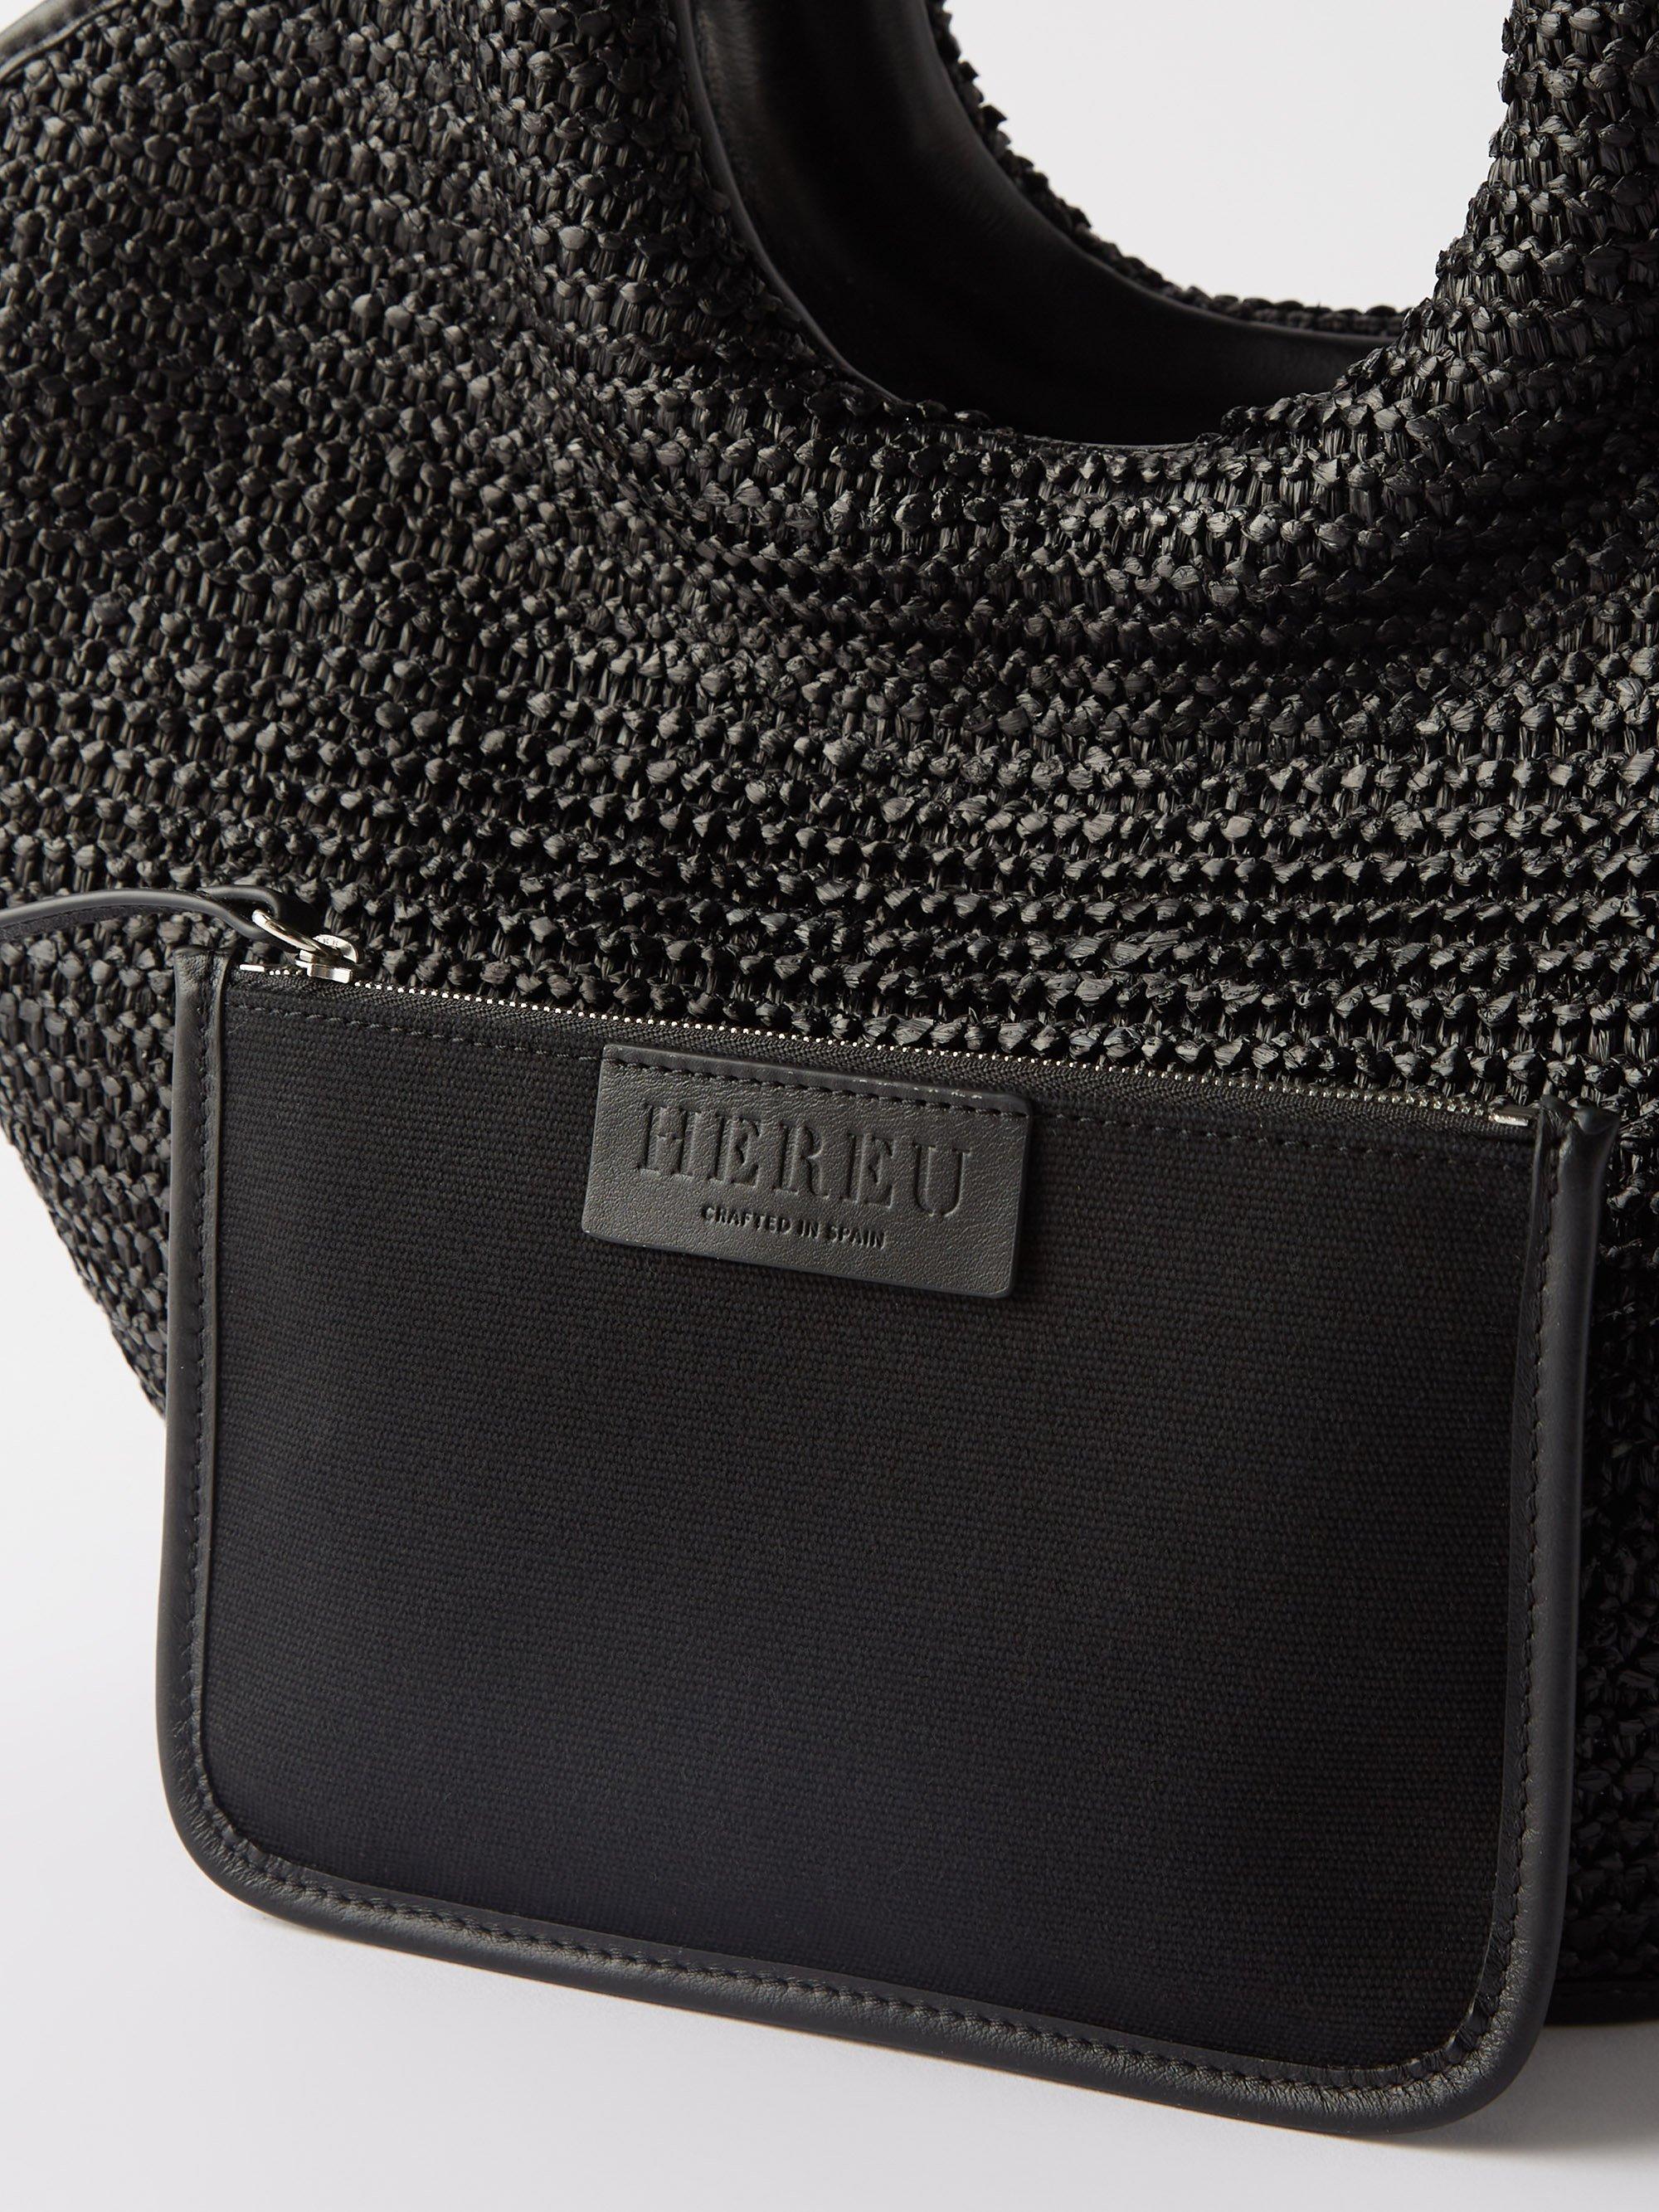 CASTELL RAFFIA - Knotted-handle Tote Bag – Hereu Studio